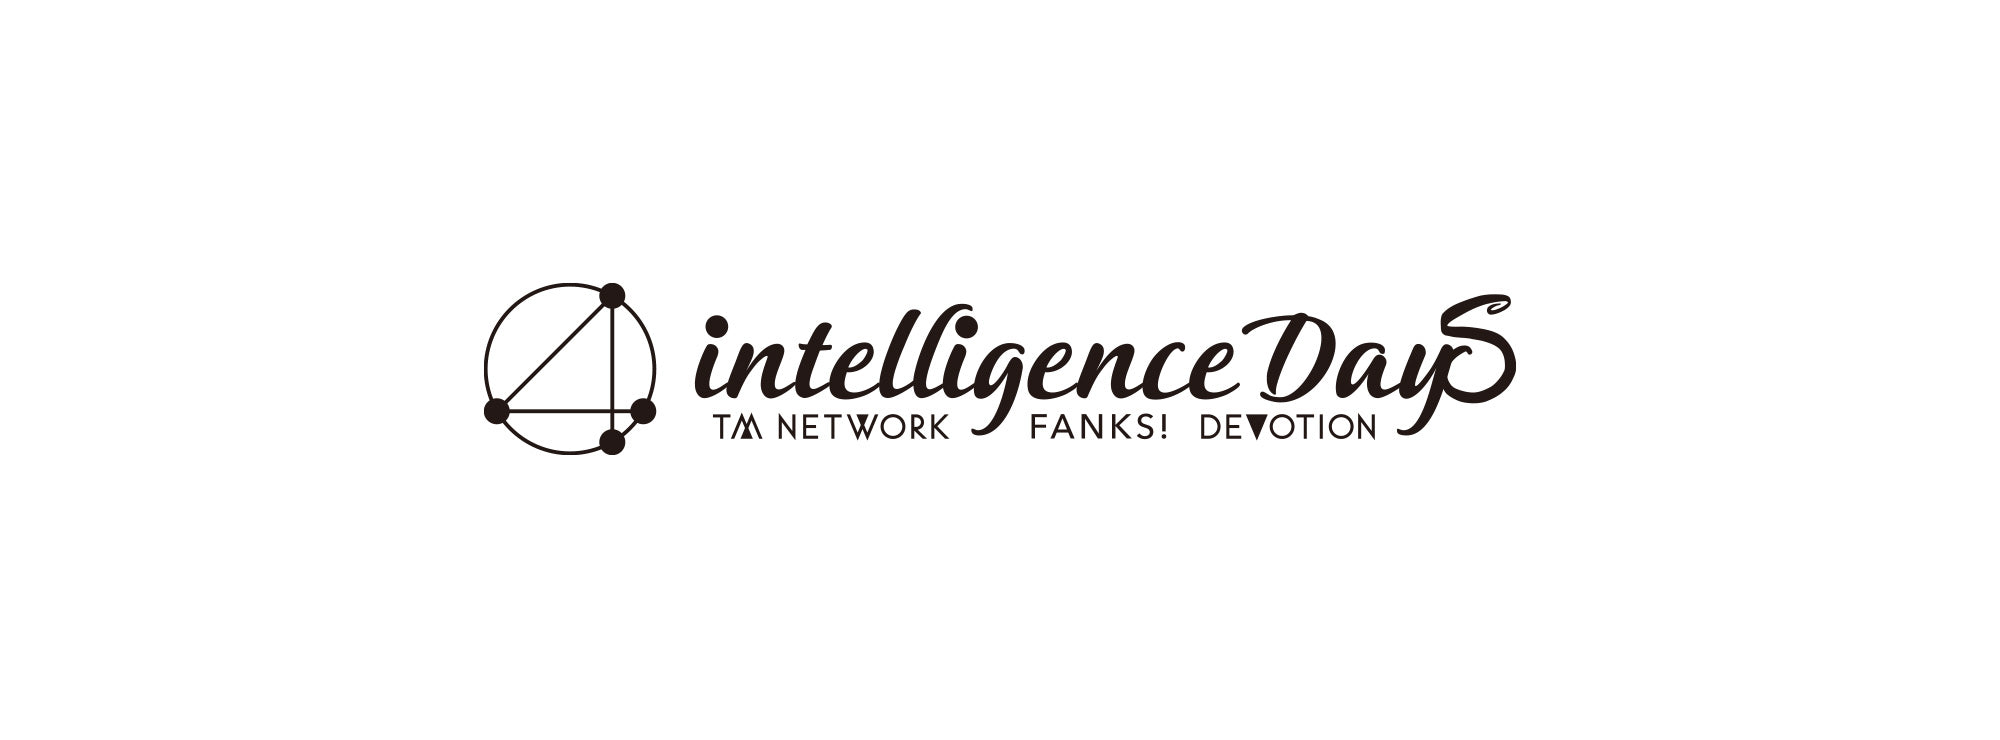 TM NETWORK 40th FANKS intelligence Days ～DEVOTION～ – T-OD